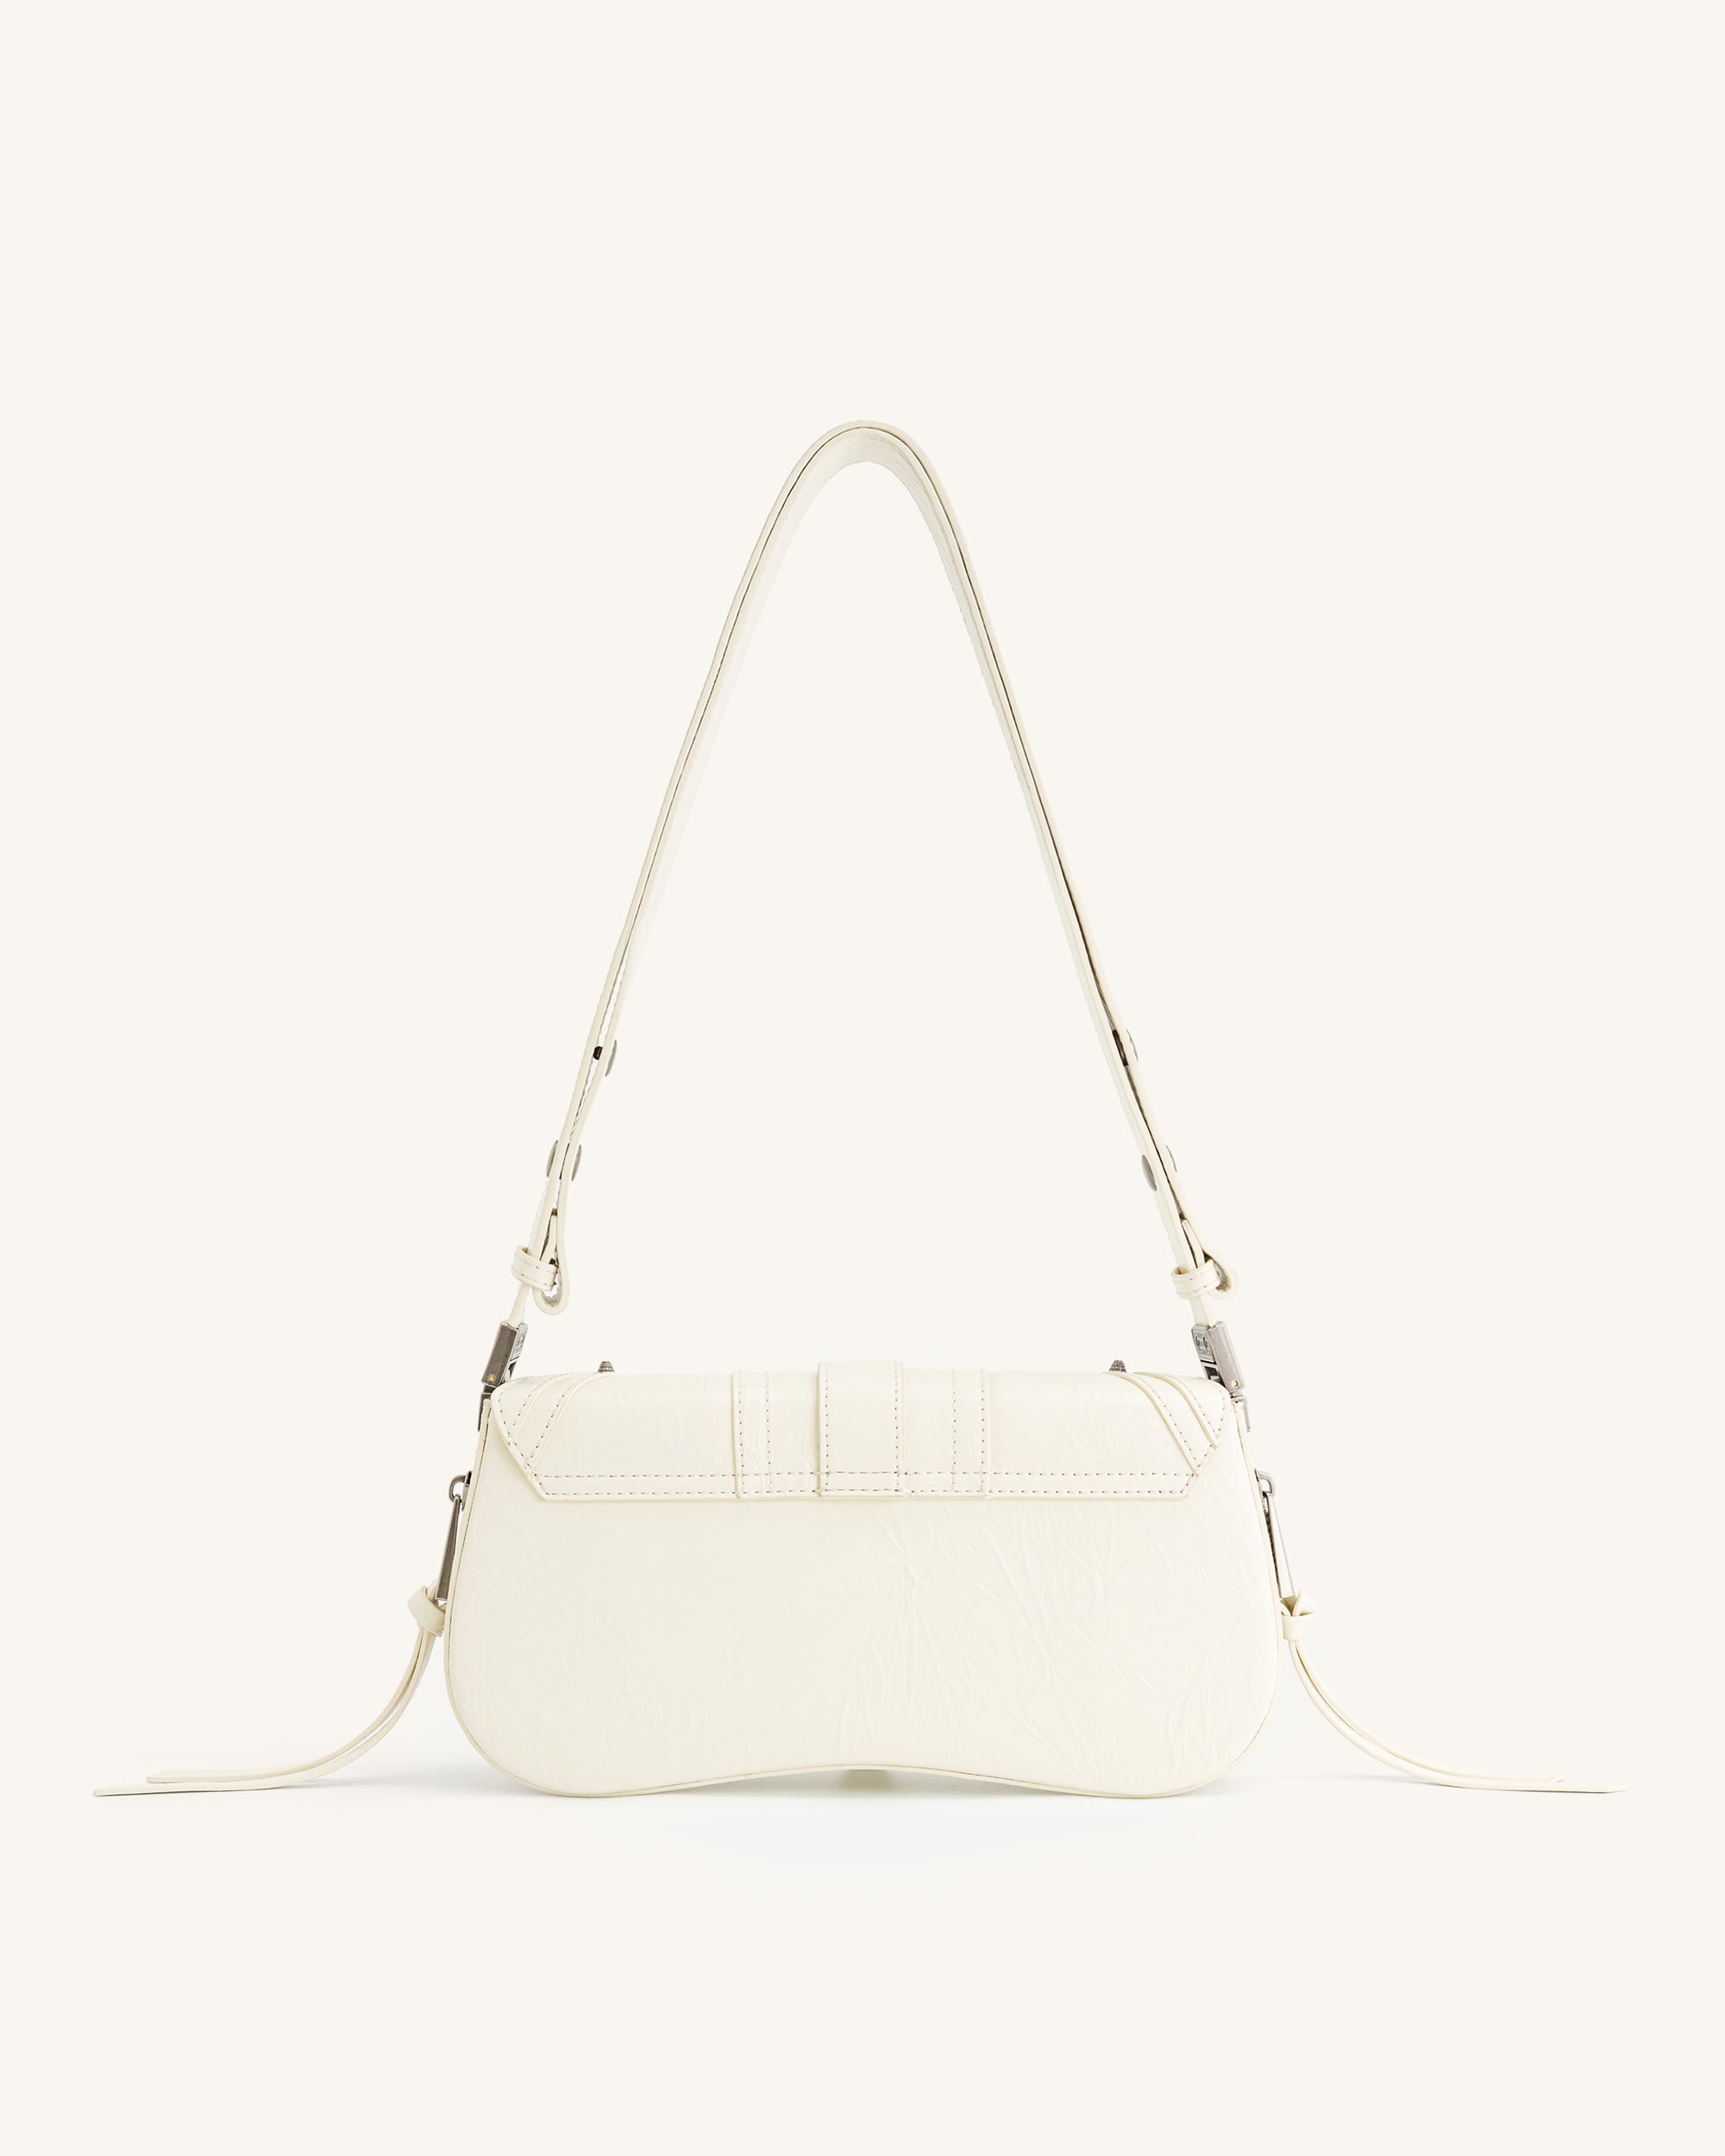 JW Pei Joy Faux Leather Shoulder Bag in White